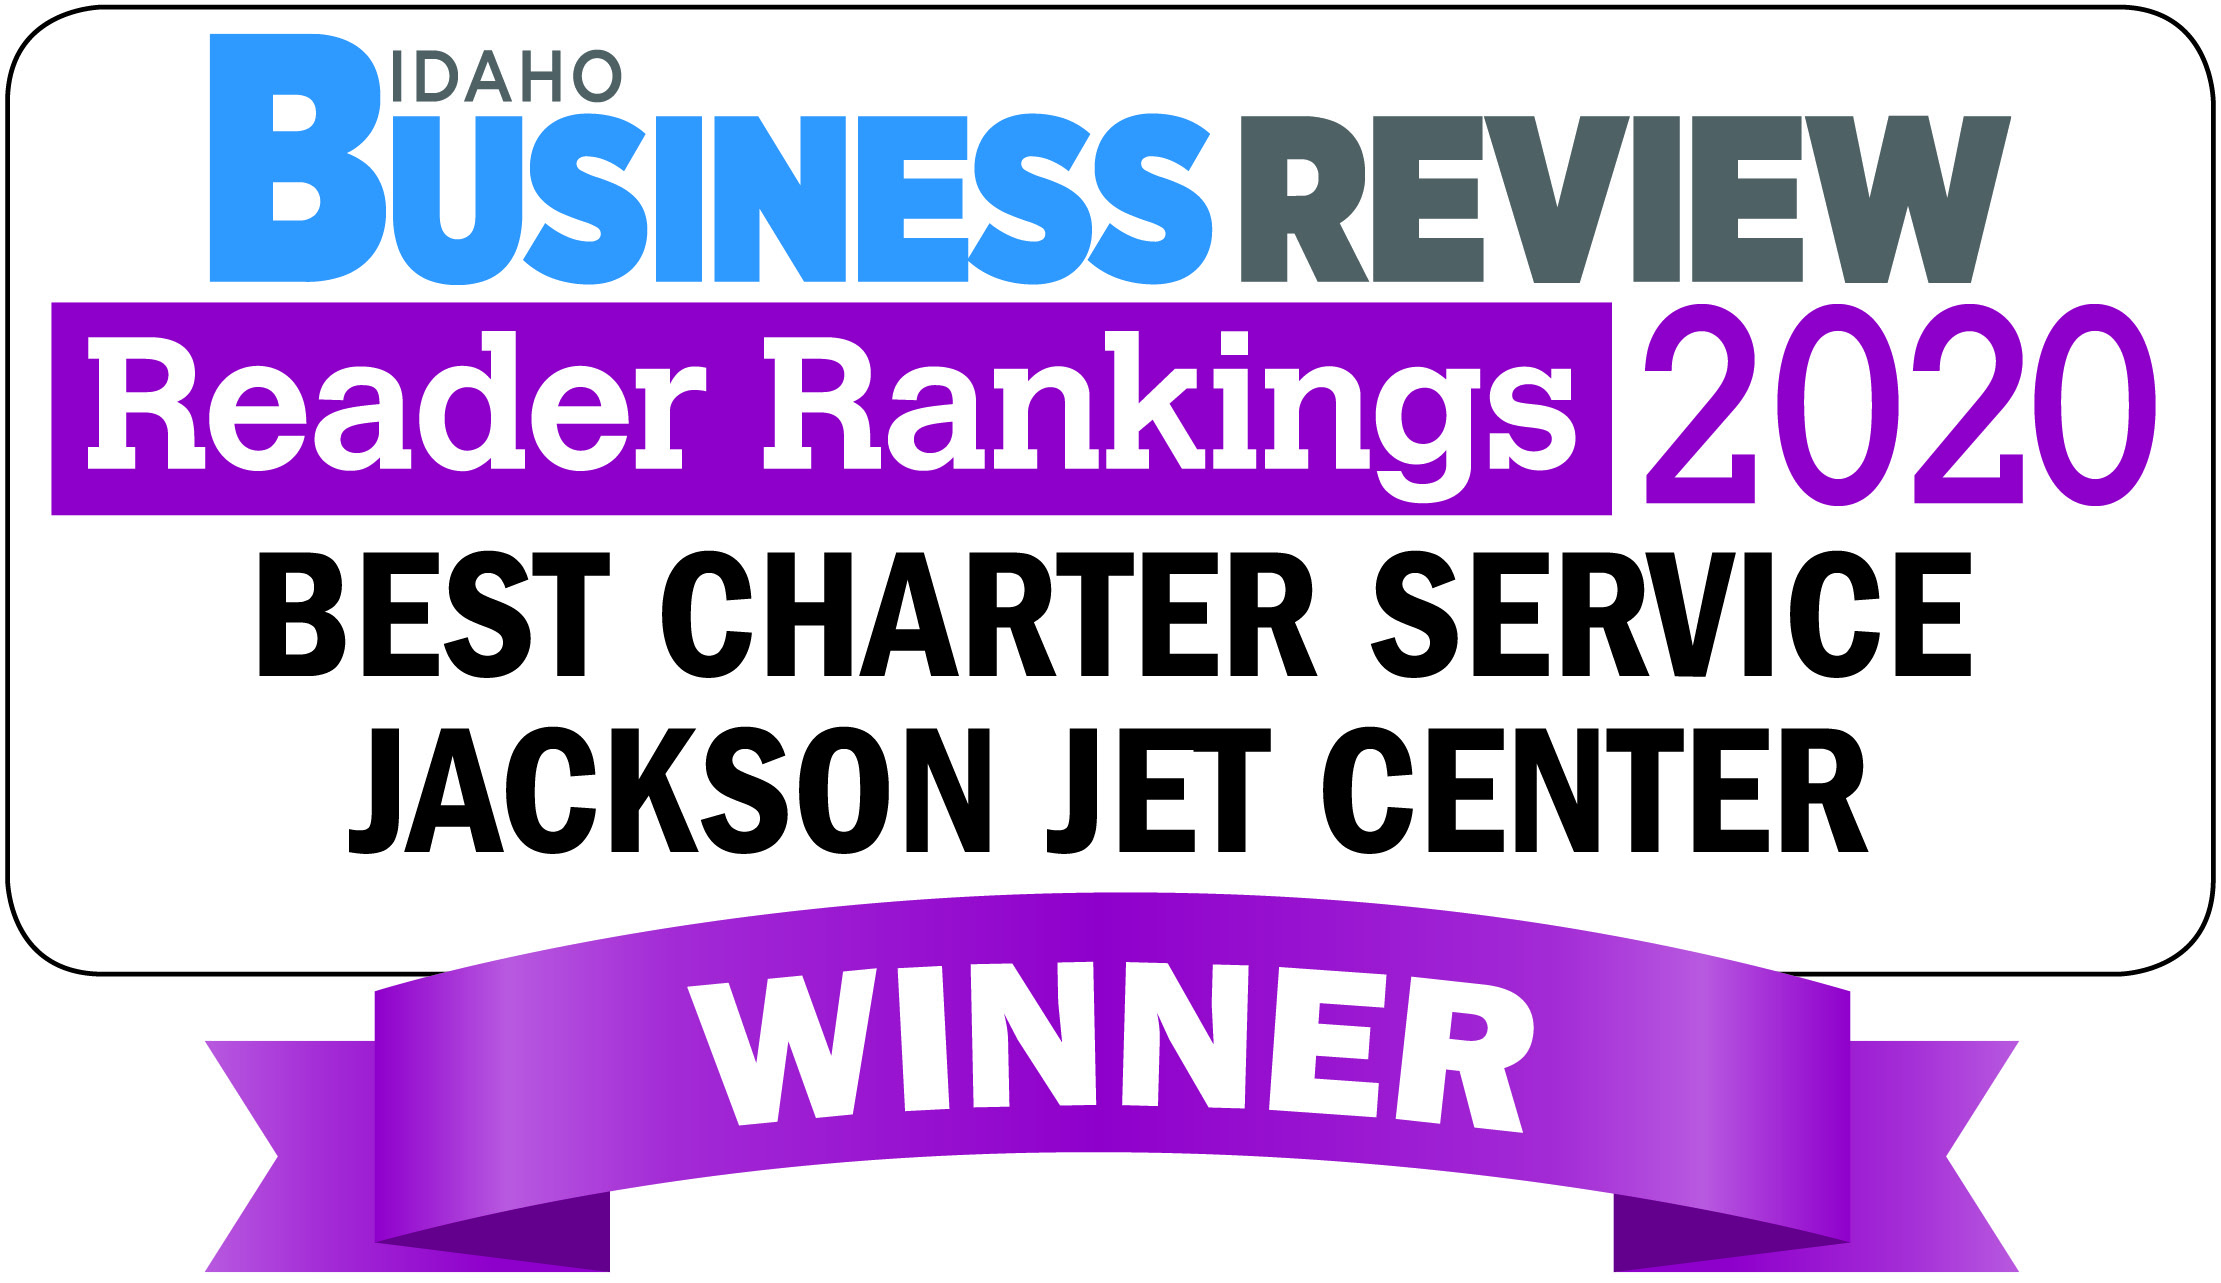 Best Charter service - Jackson Jet Center